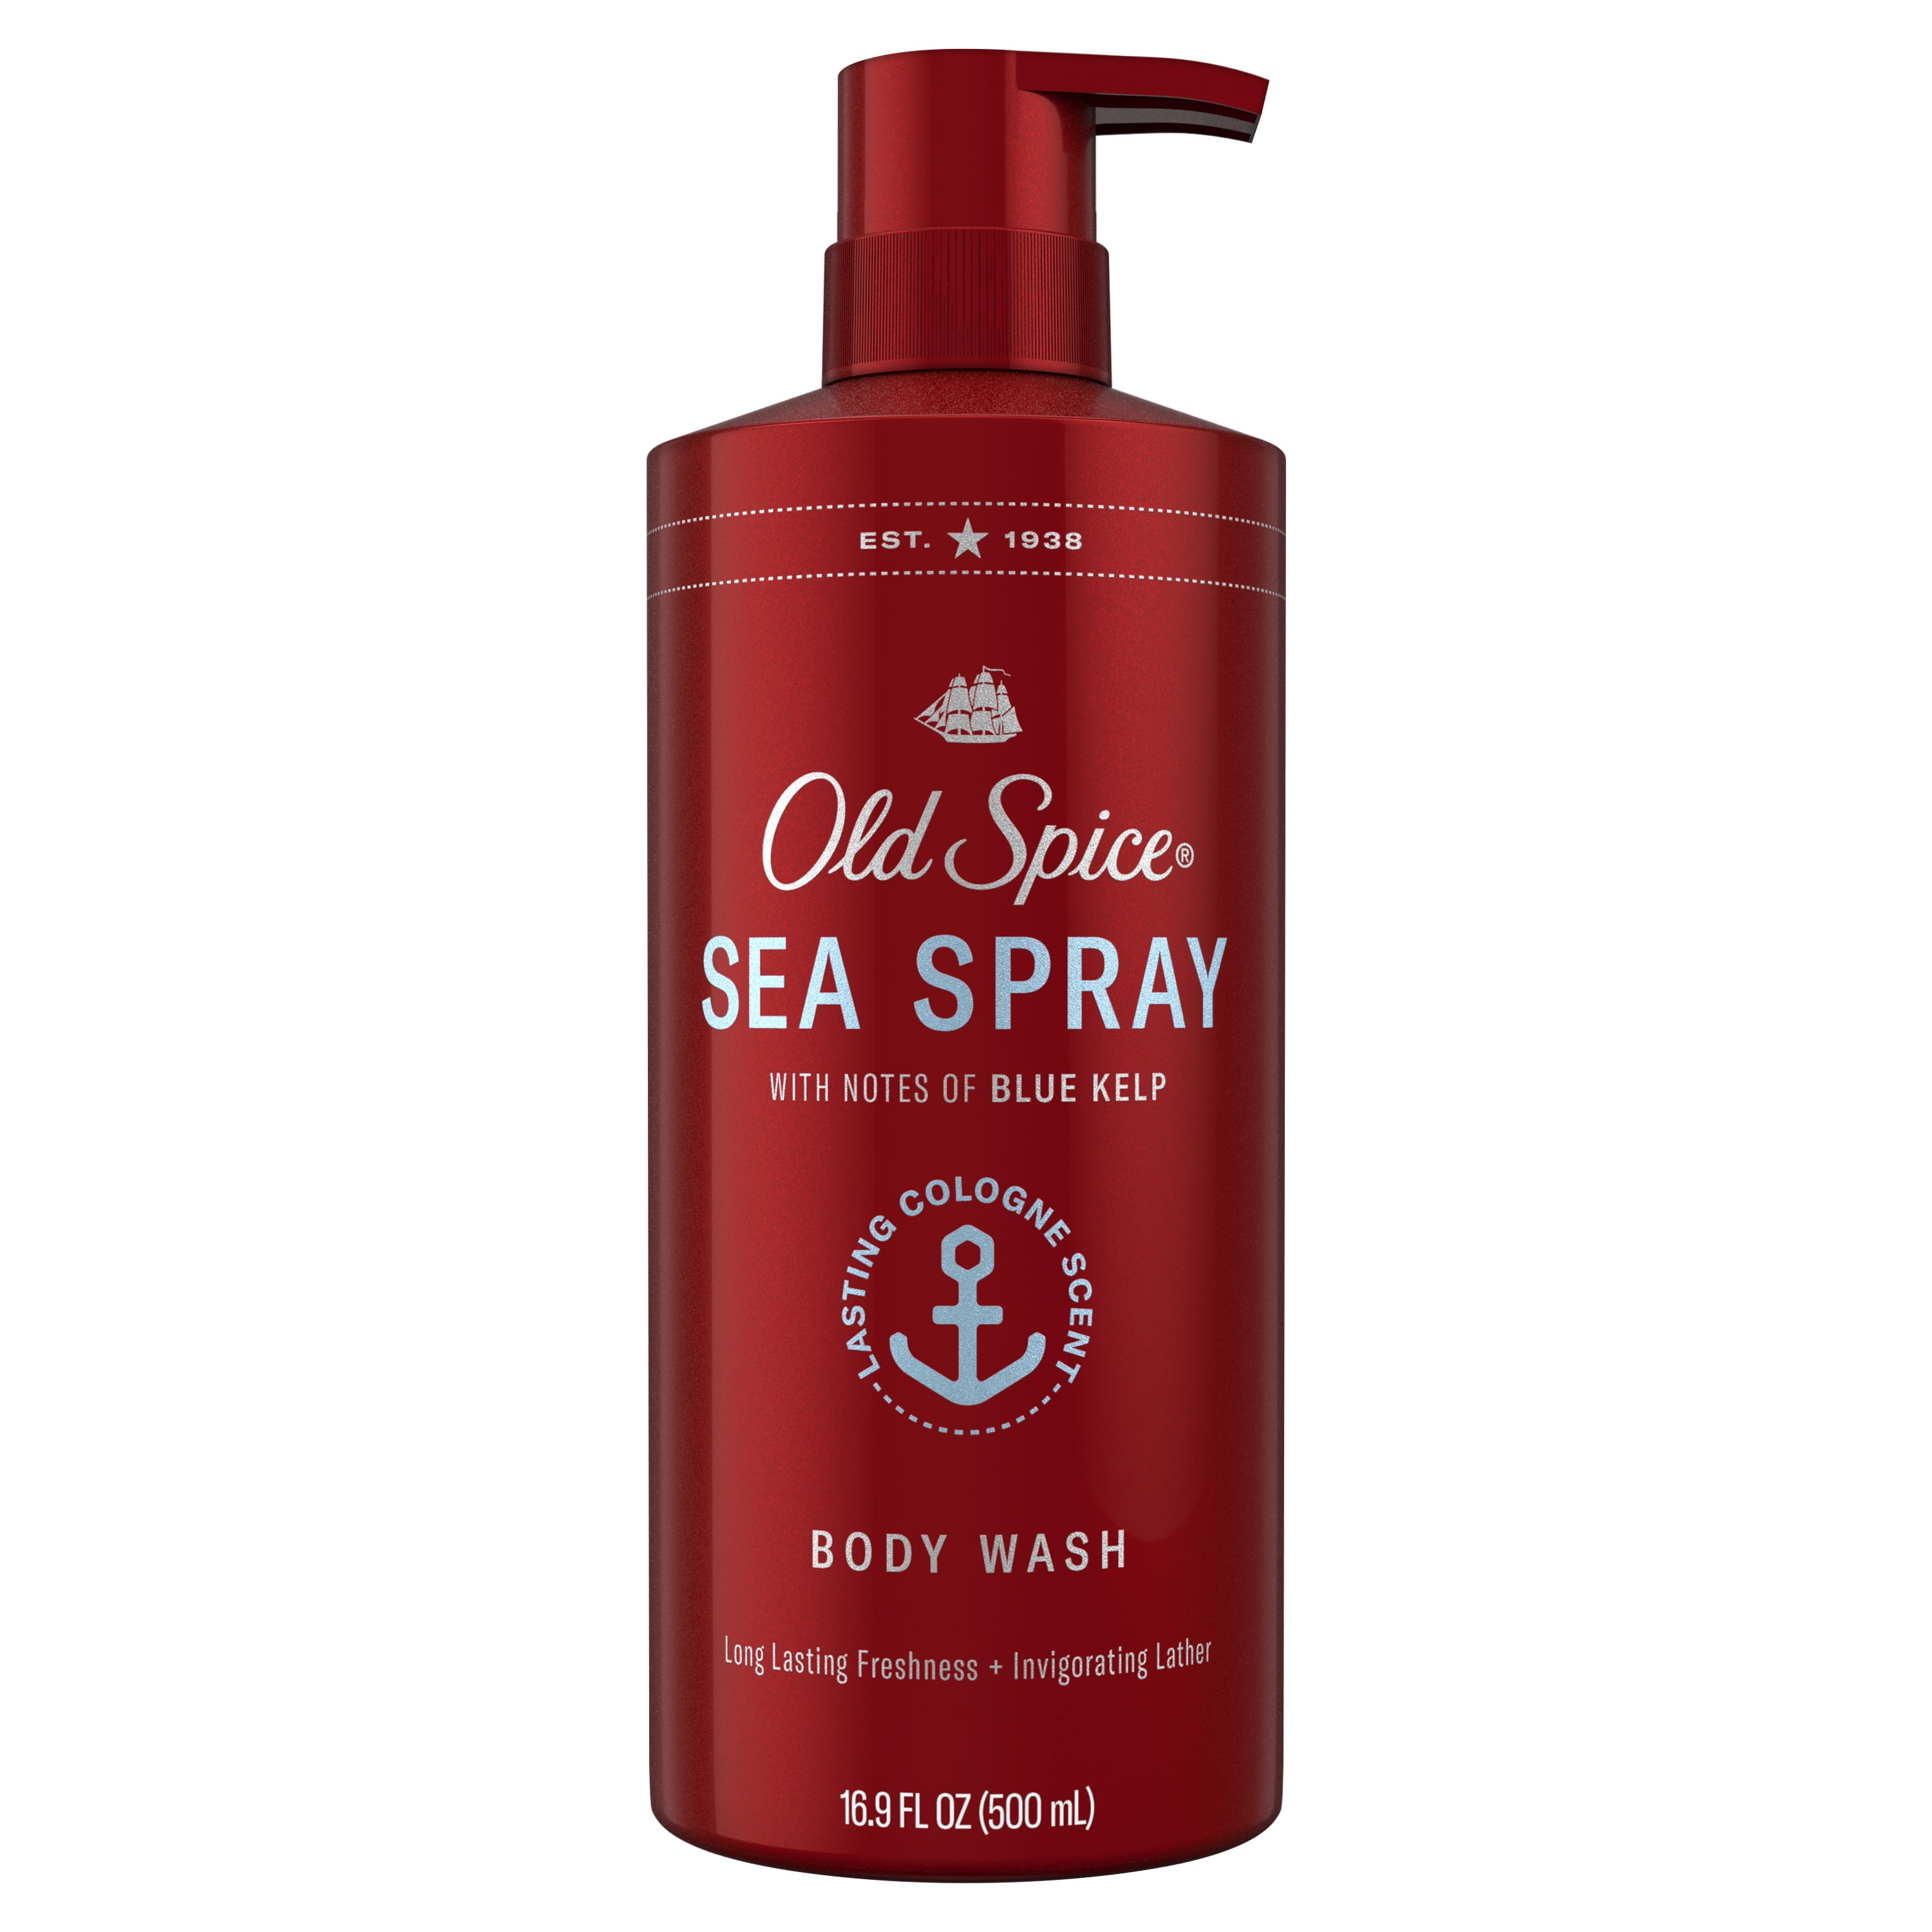 Old Spice Sea Spray with Blue Kelp Body Wash, 16.9 Fl. Oz